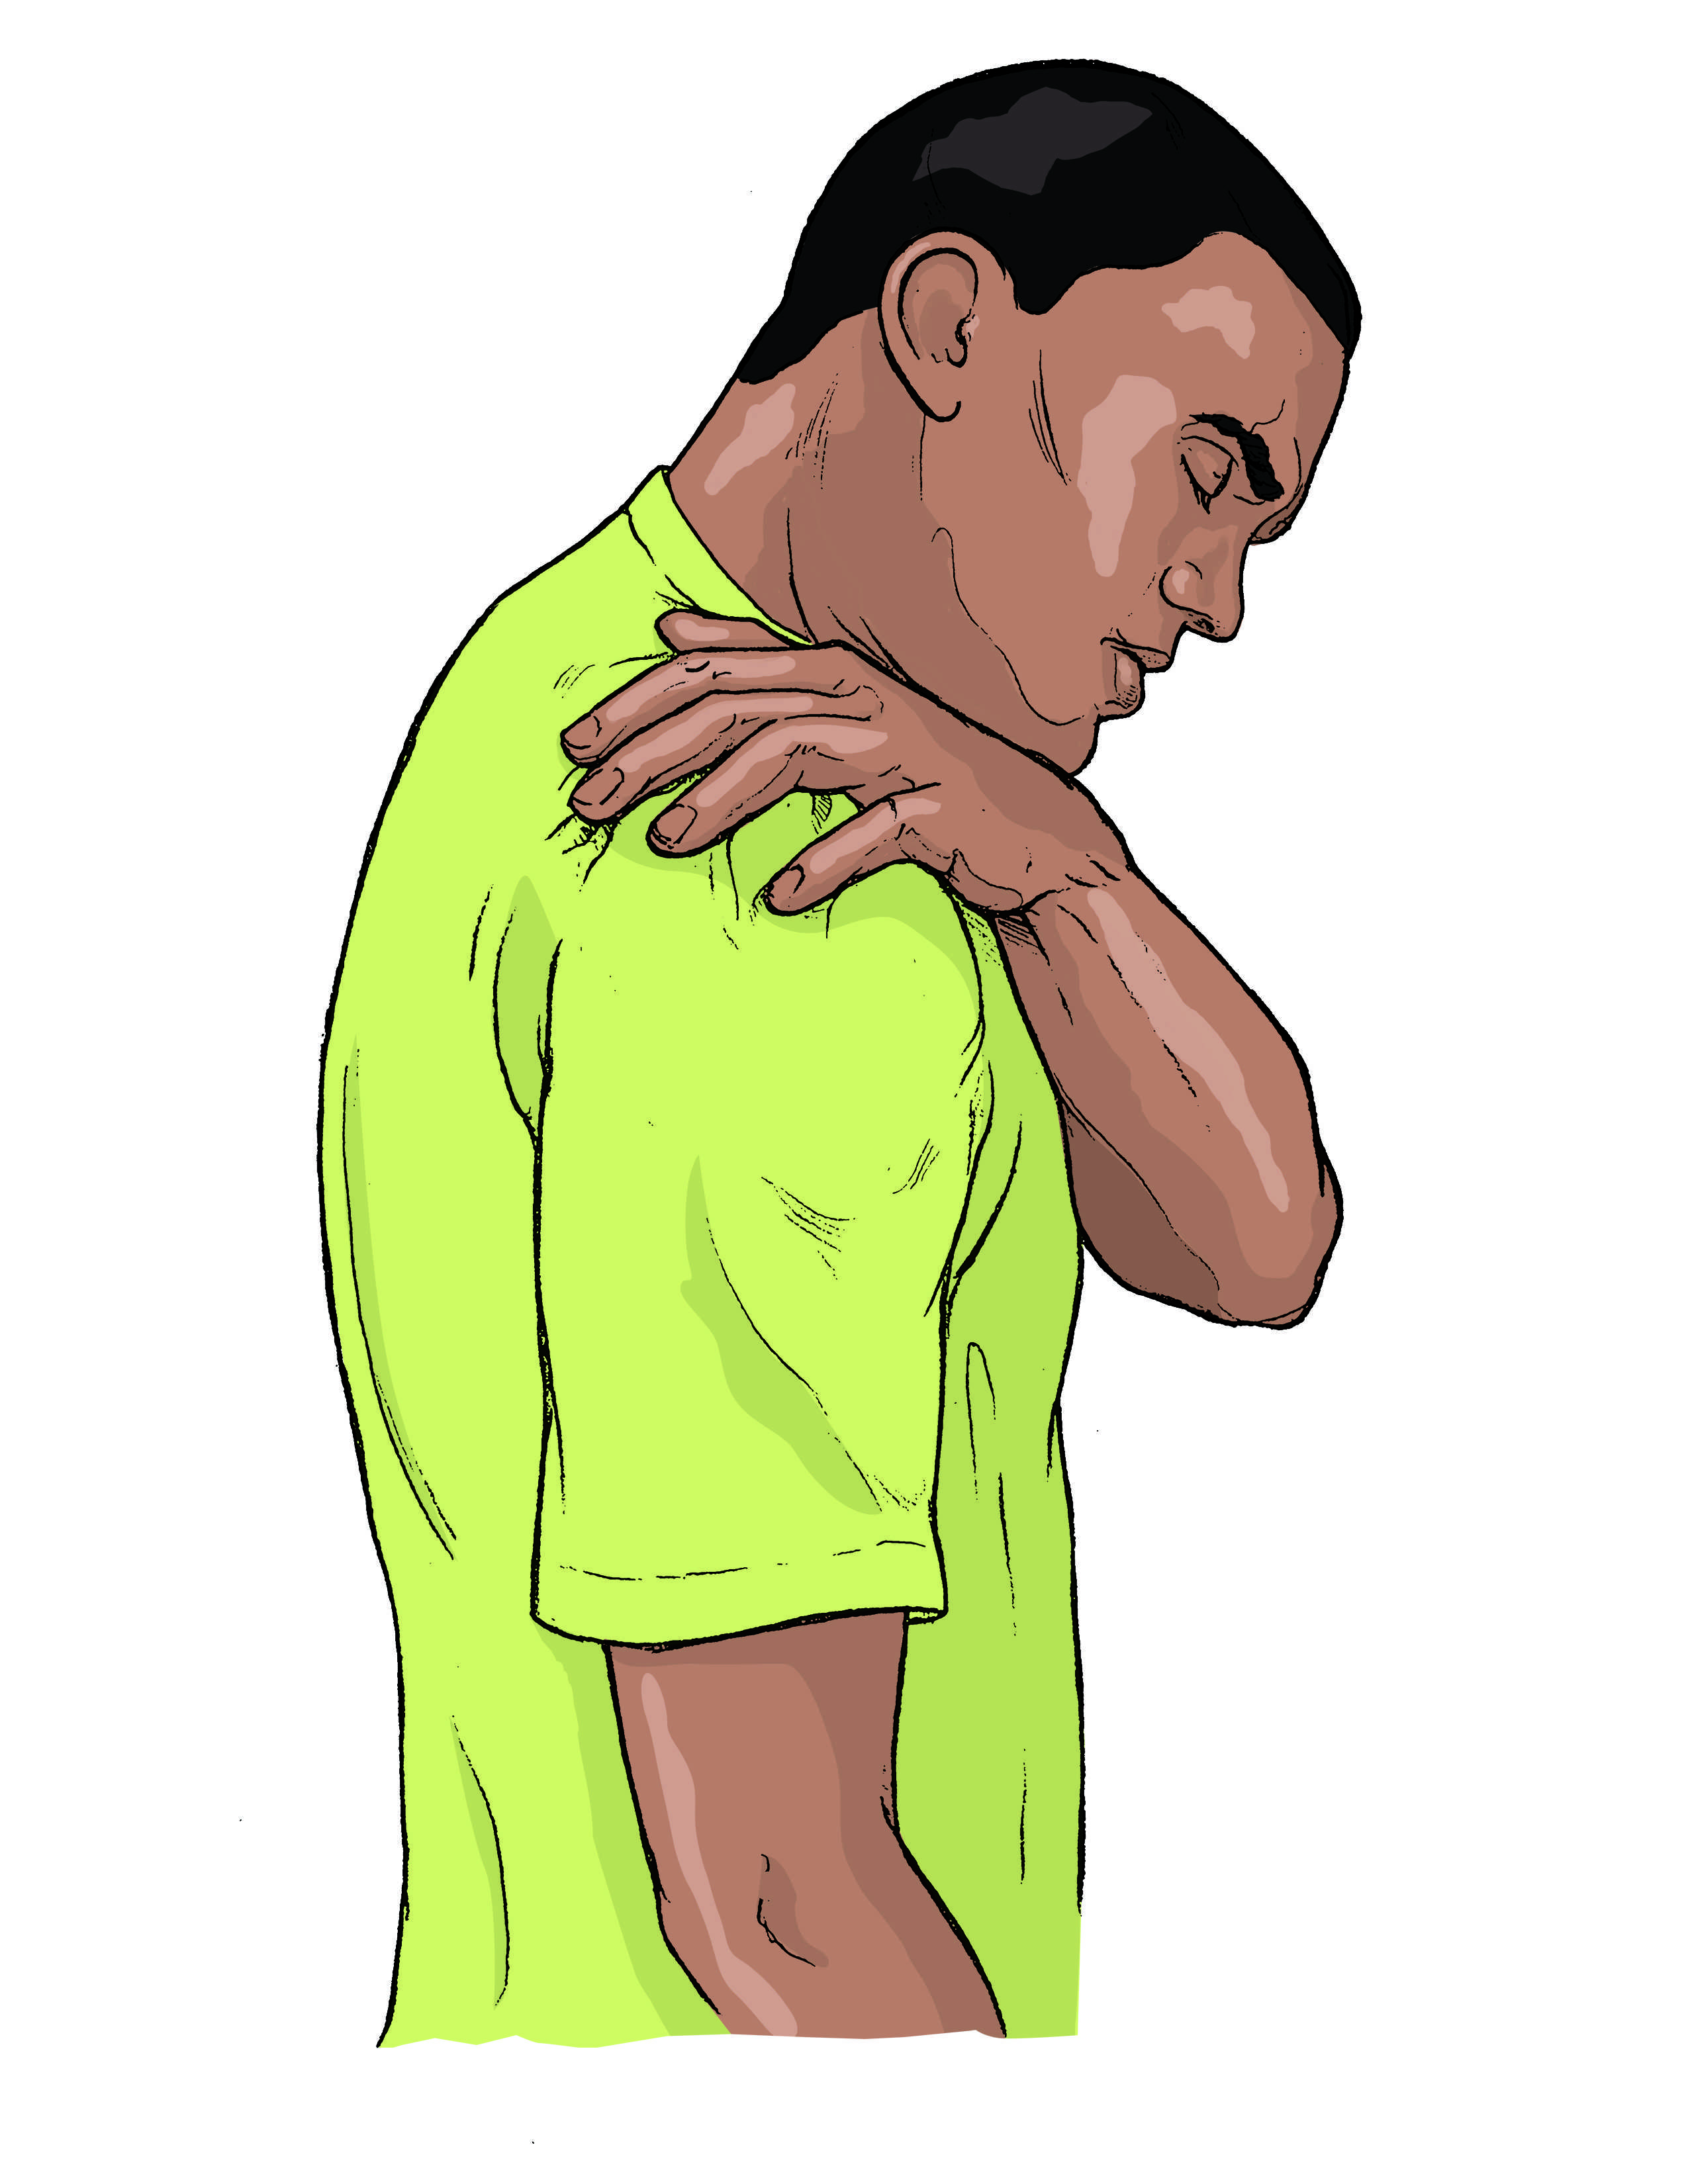 Ebola symptom: Muscle pain